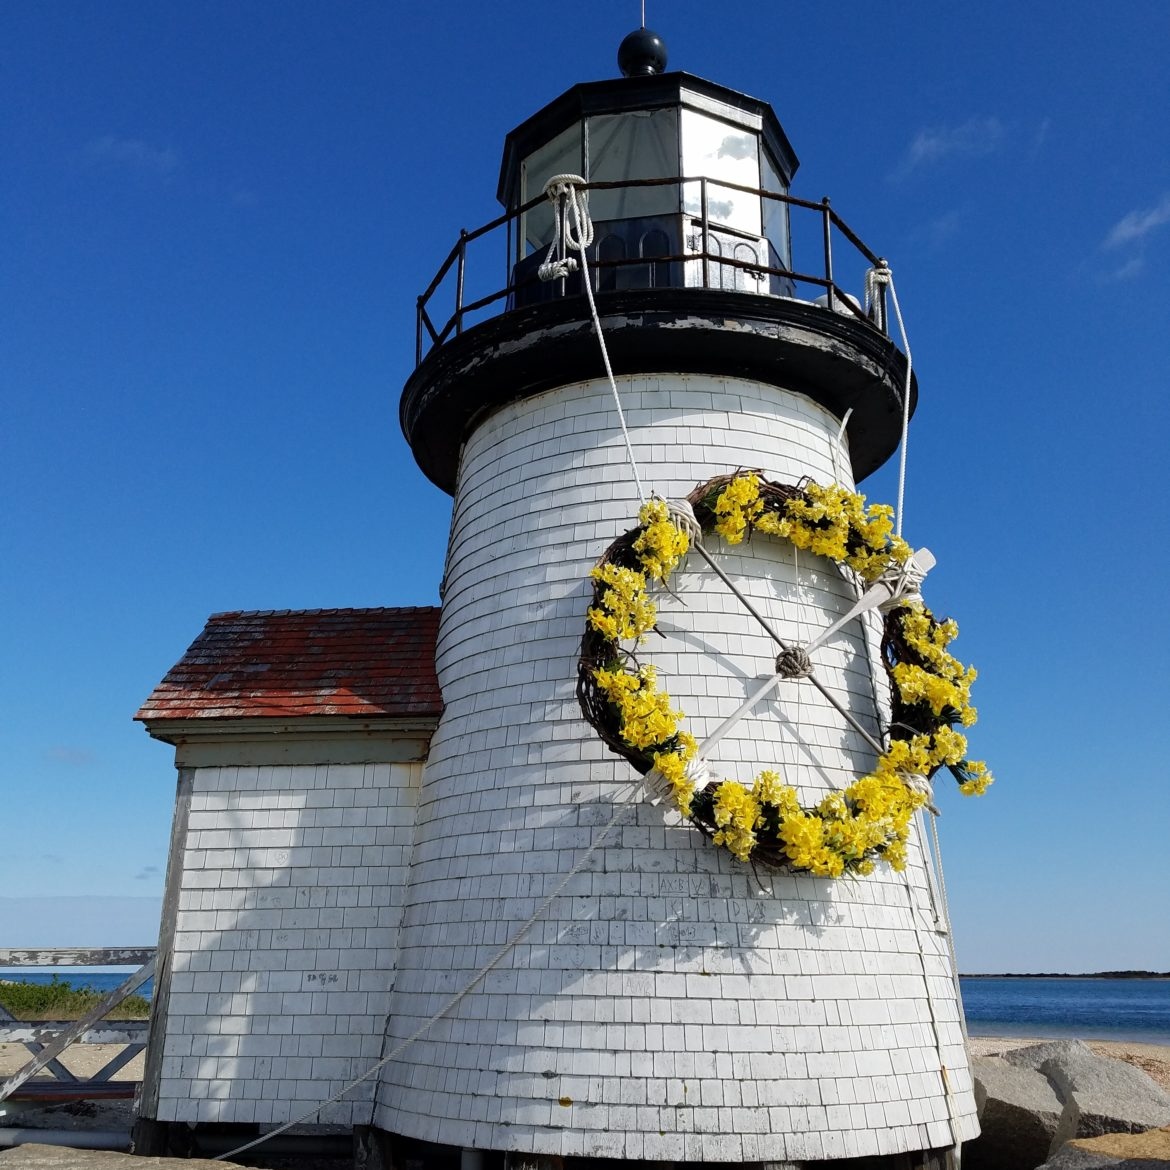 The island is blooming! 🌼  #NantucketWhaler #Nantucket
#NewEngland #DaffodilFestival #ACKdaffy